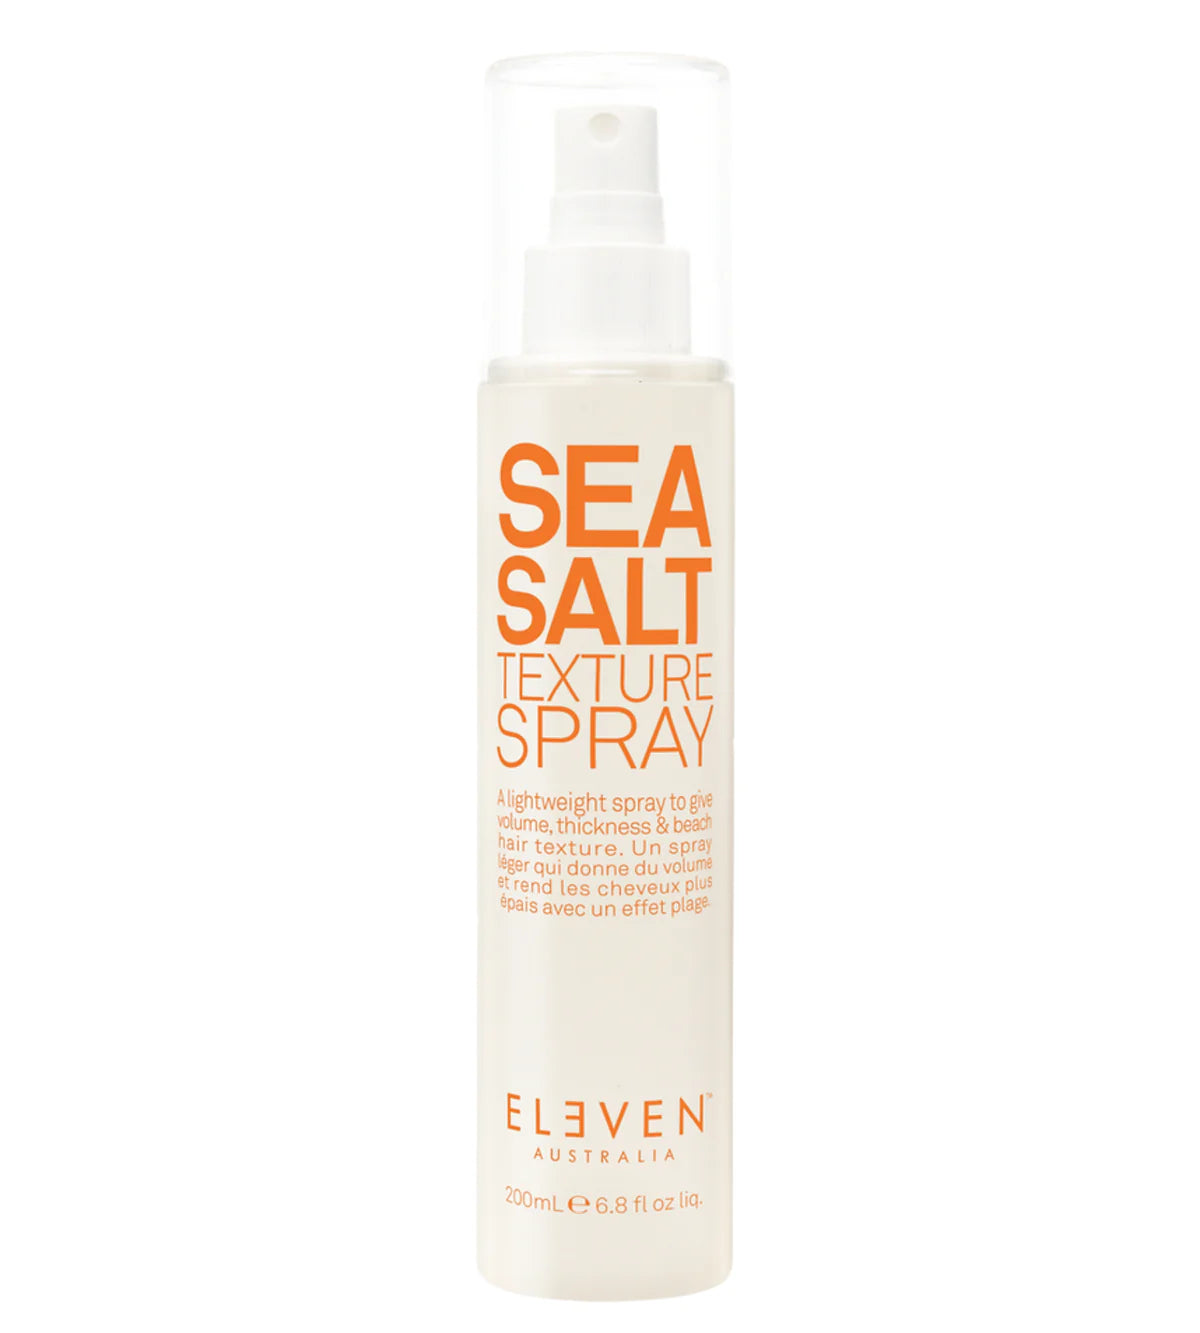 Sea salt texture spray